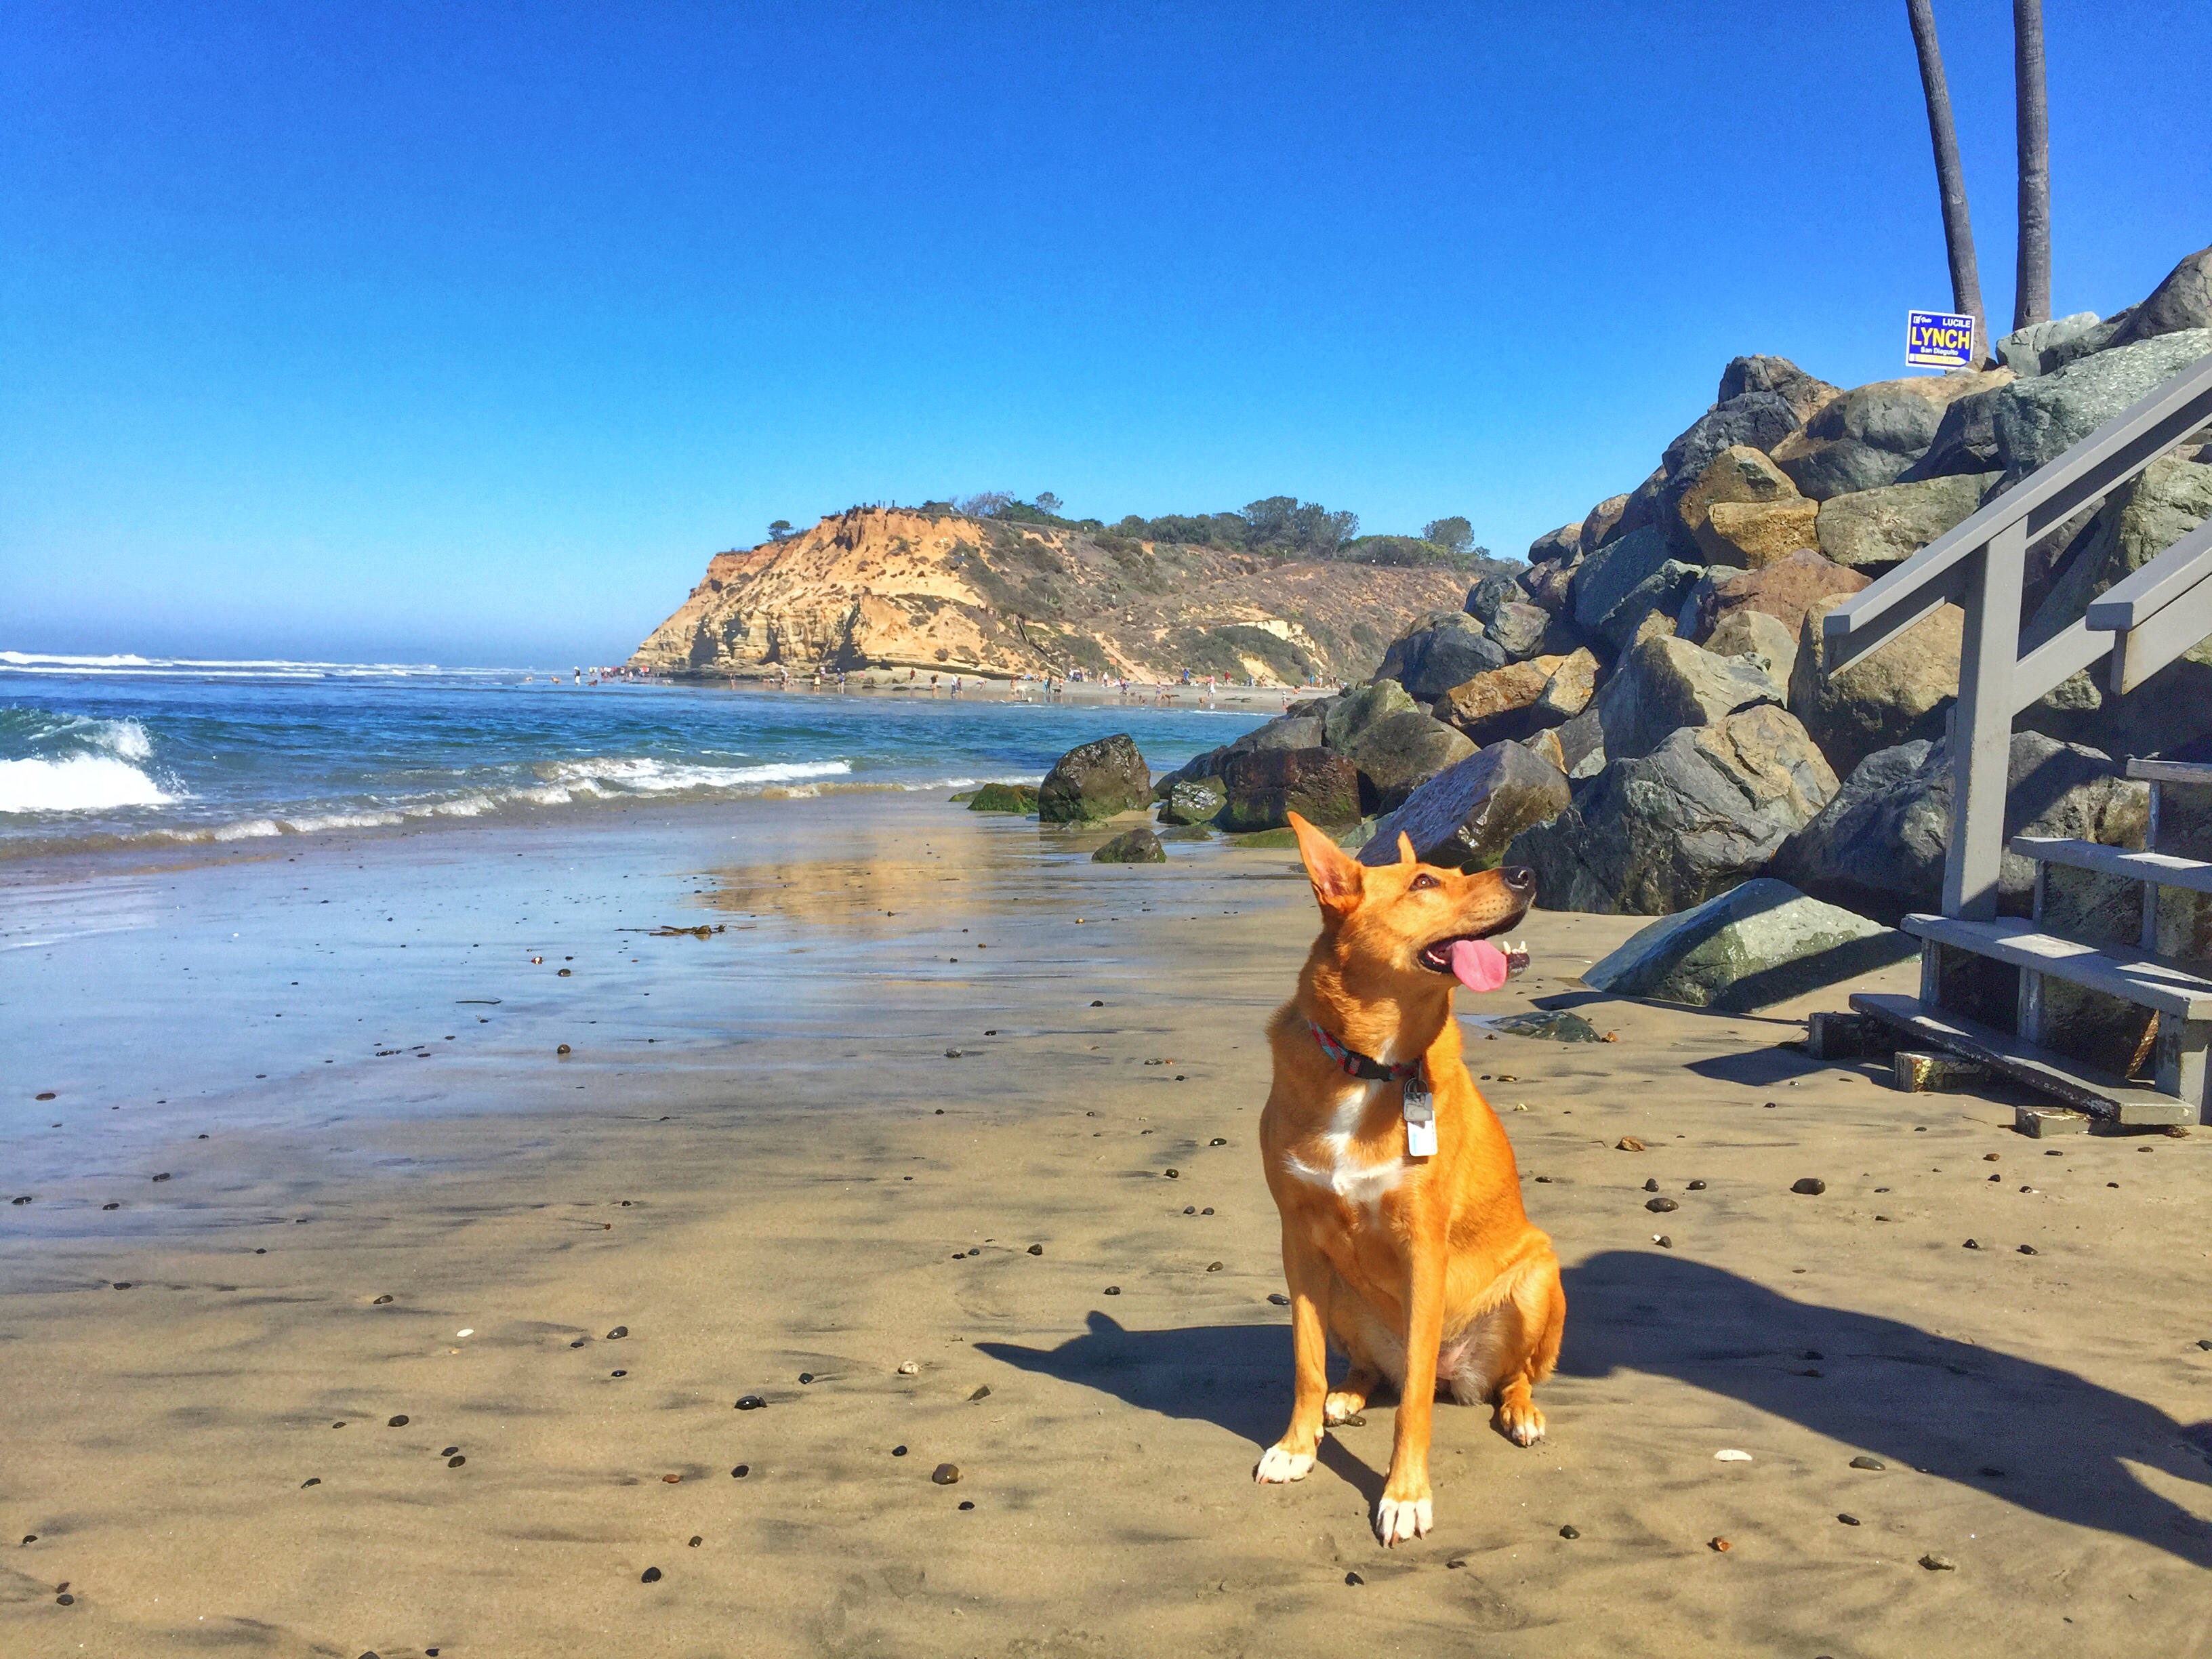 Harley enjoying the dog beach